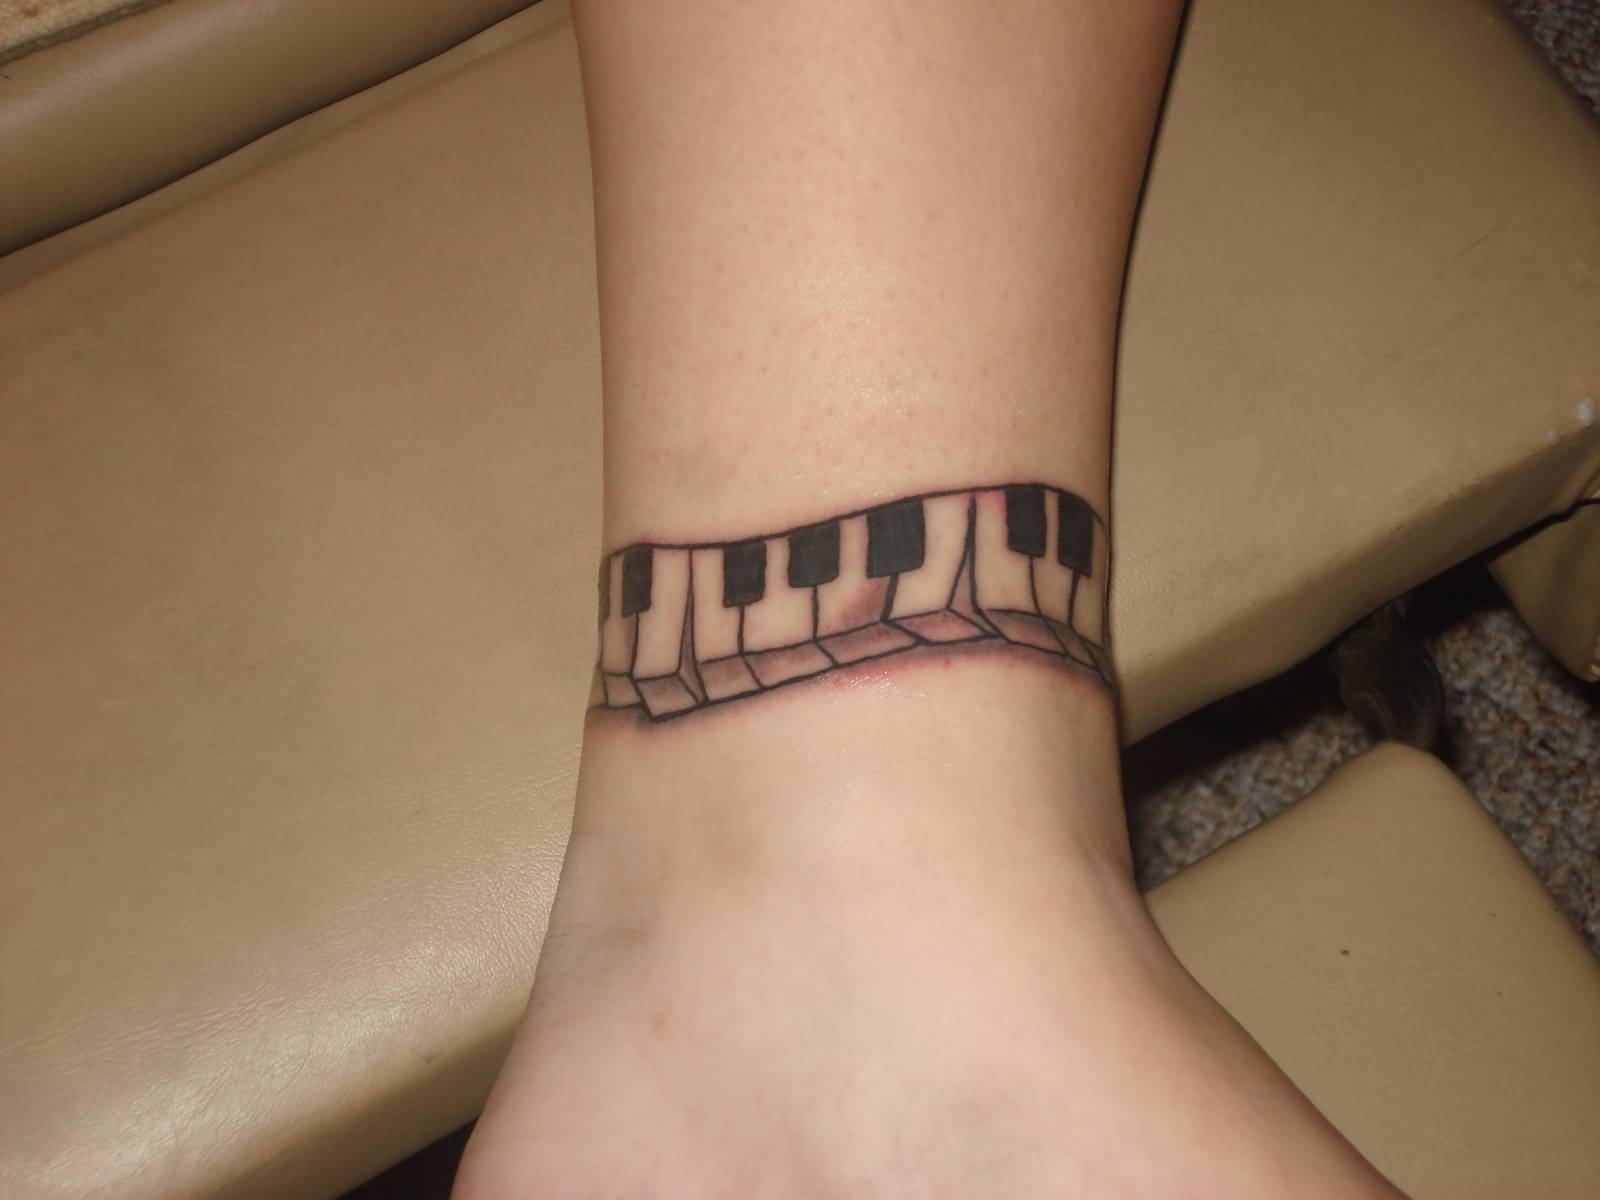 Very Nice Piano Keys Wrist Band Tattoo